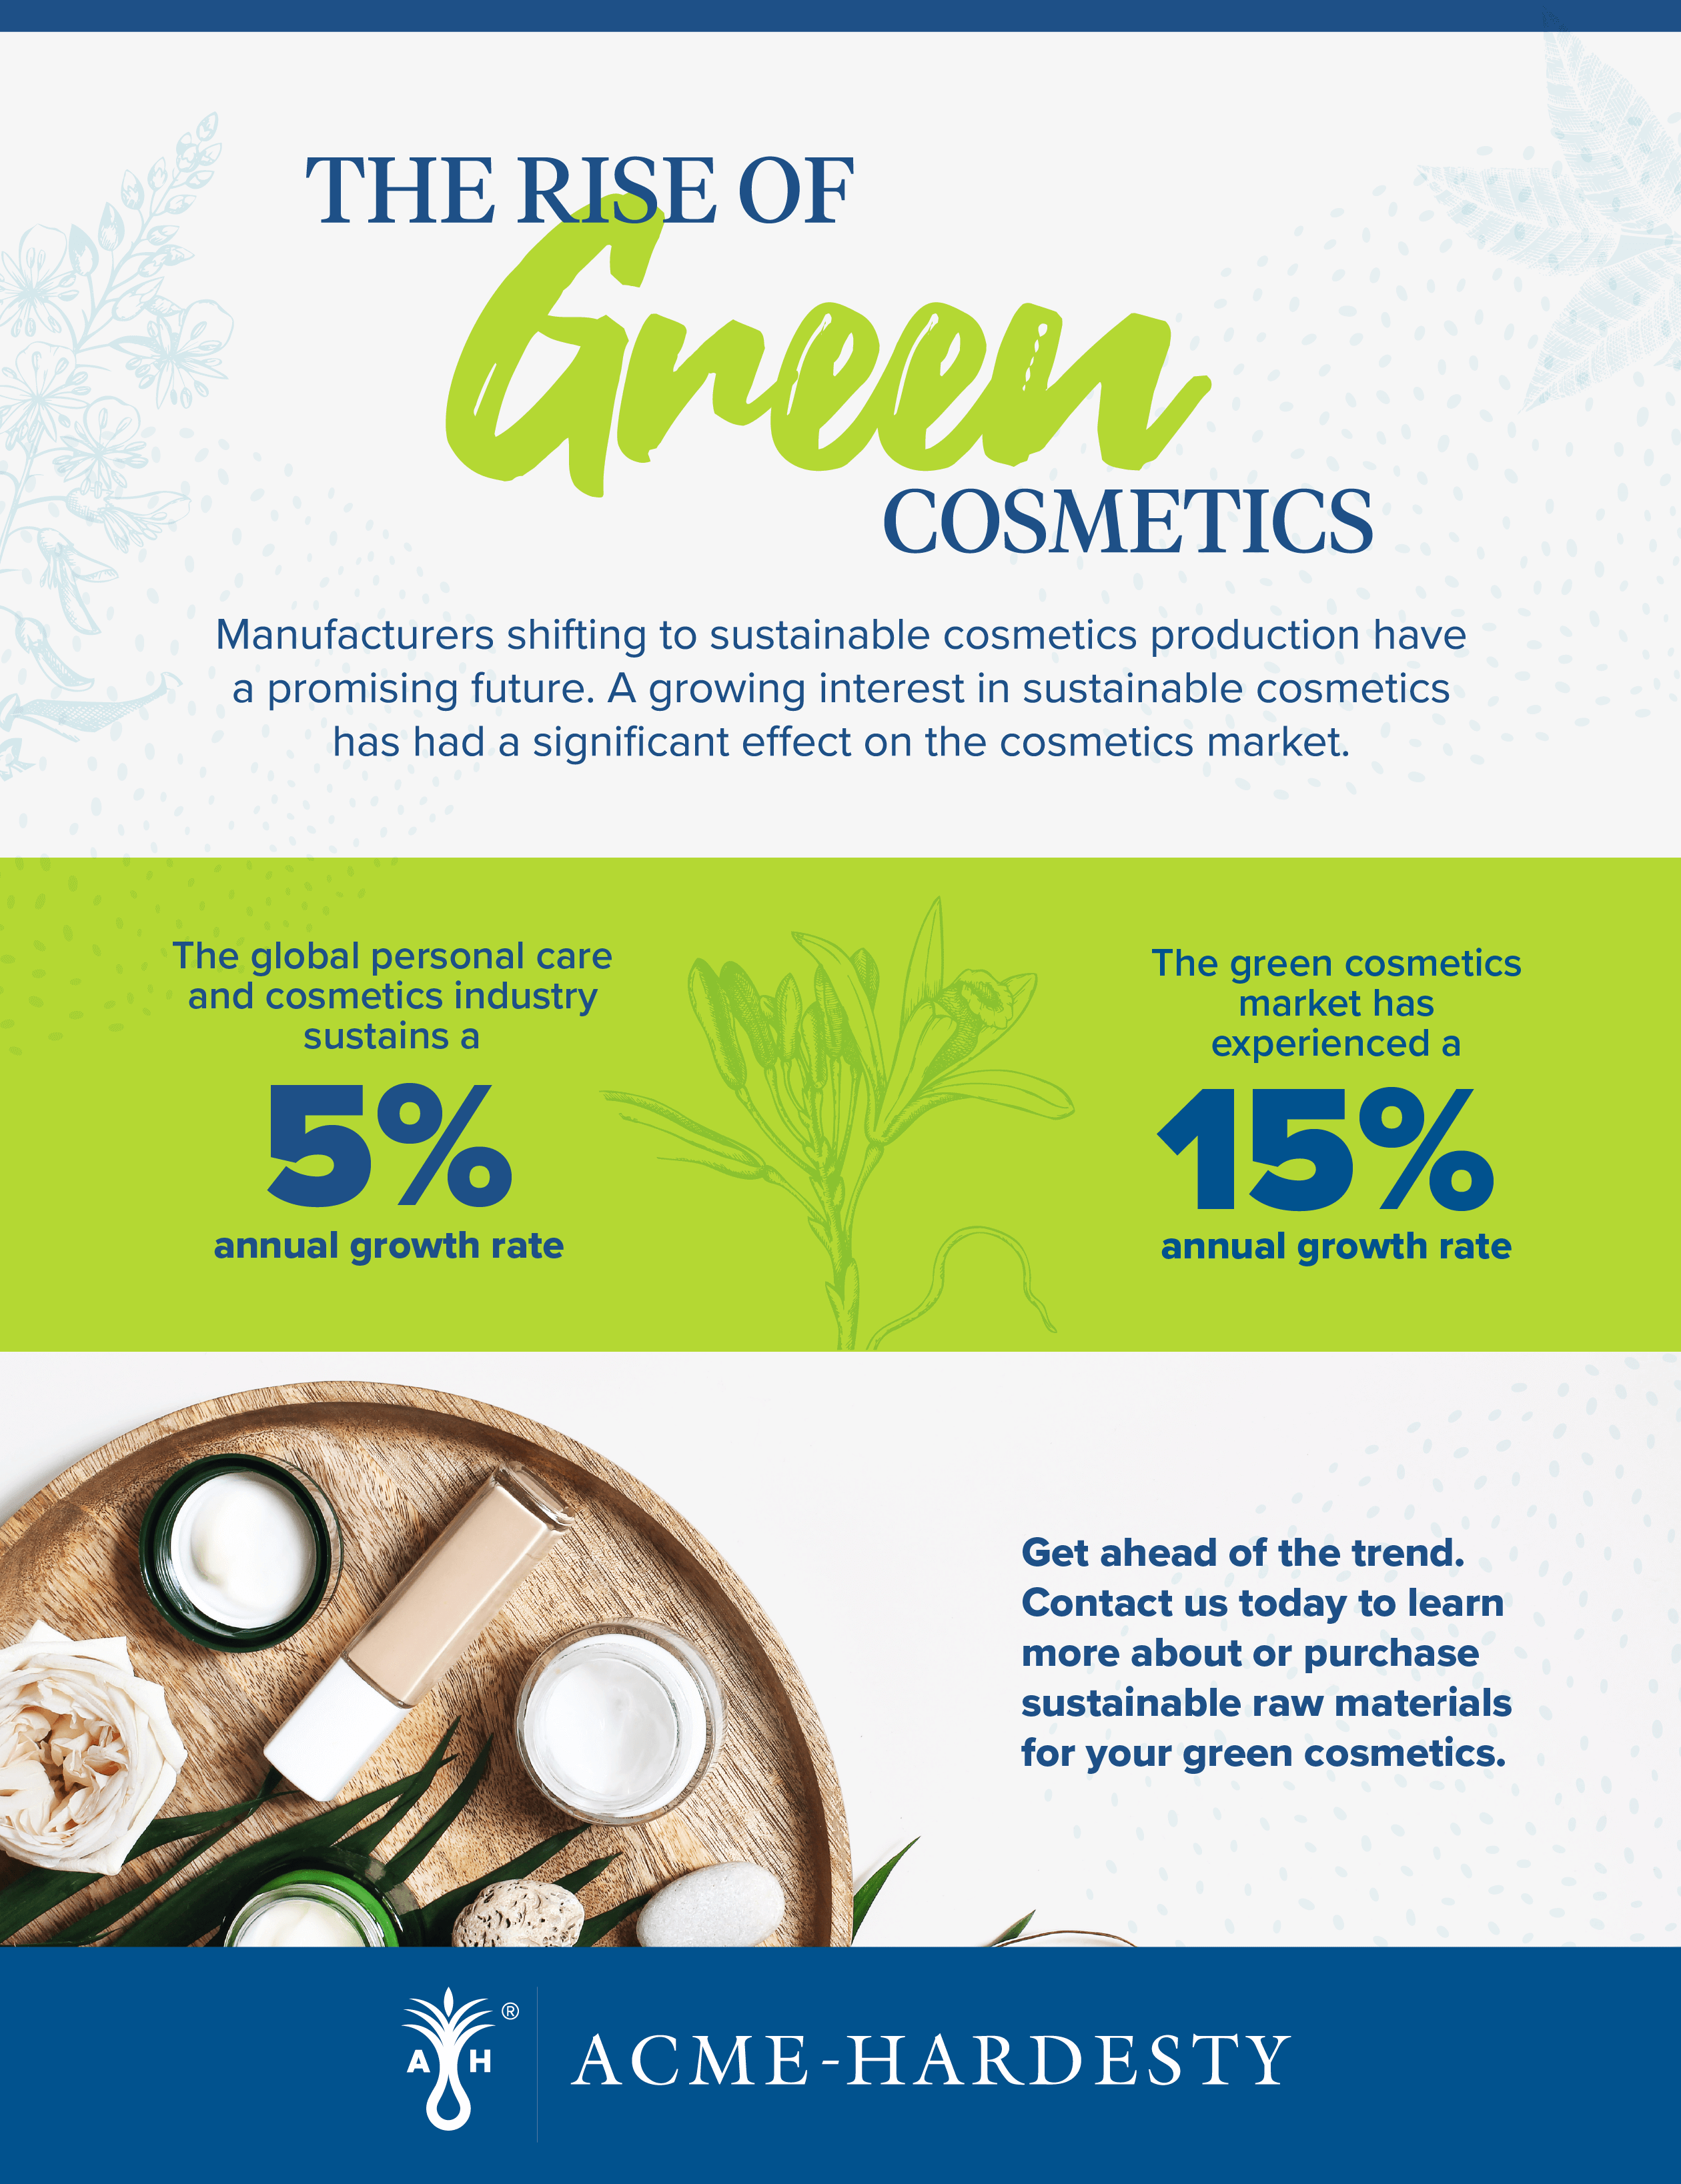 Rated Green: cosmetics & skincare at MAKEUP